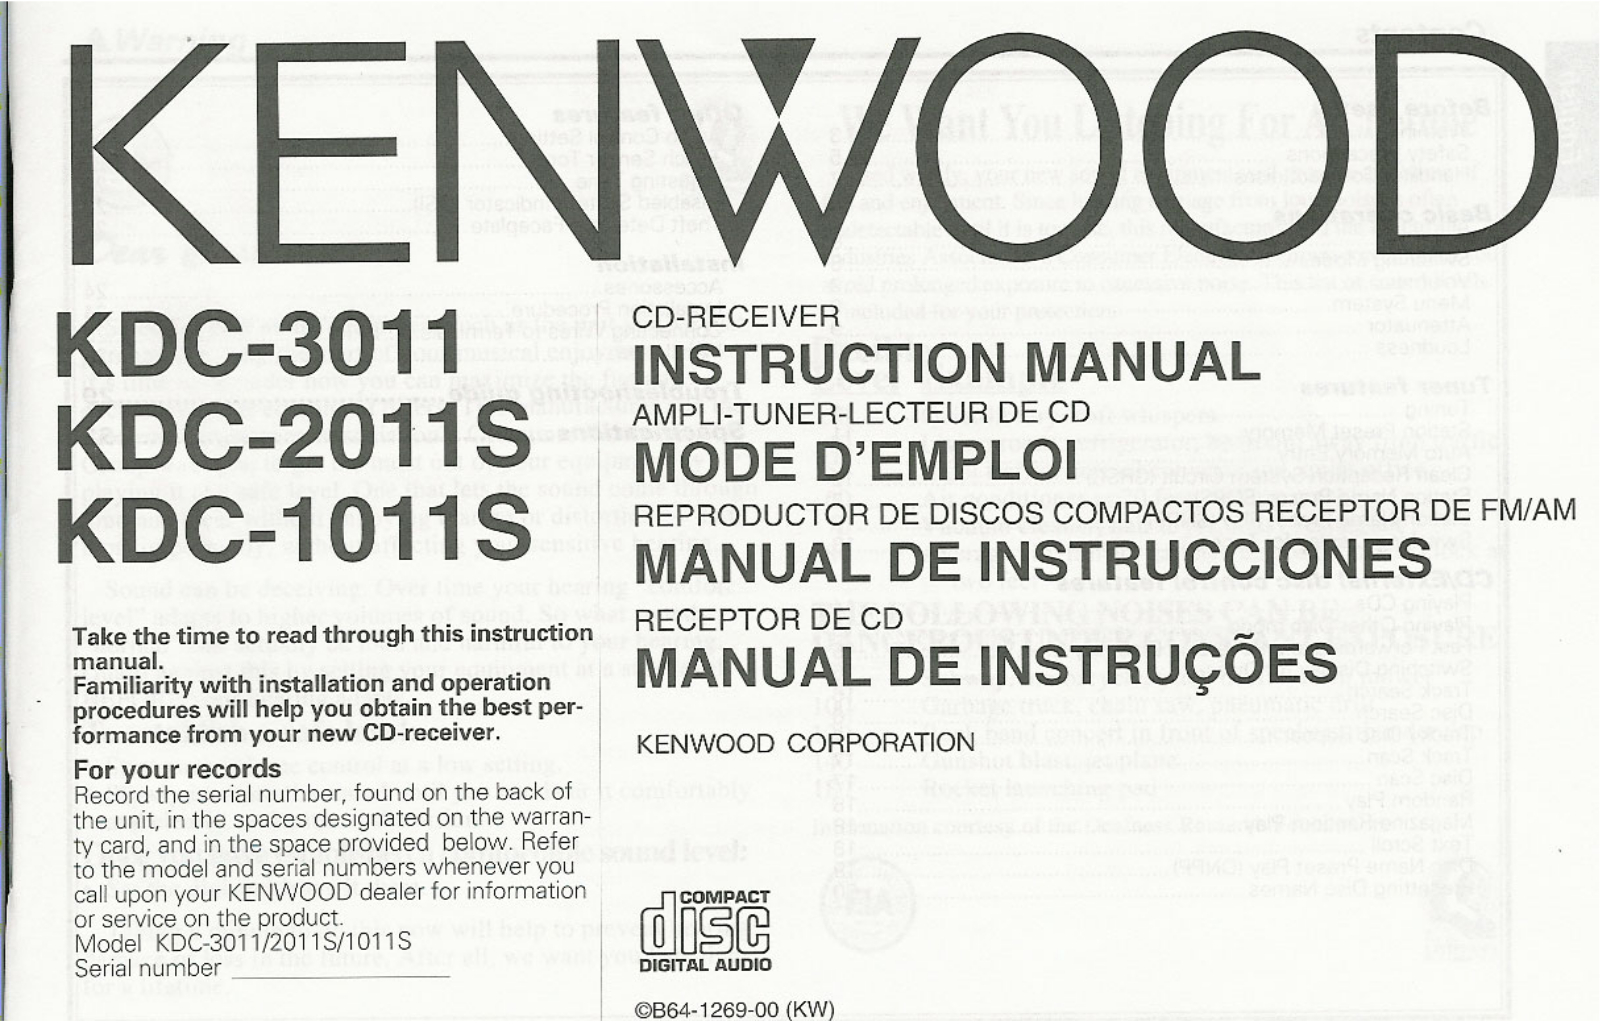 Kenwood KDC-3011, KDC-1011S Manual